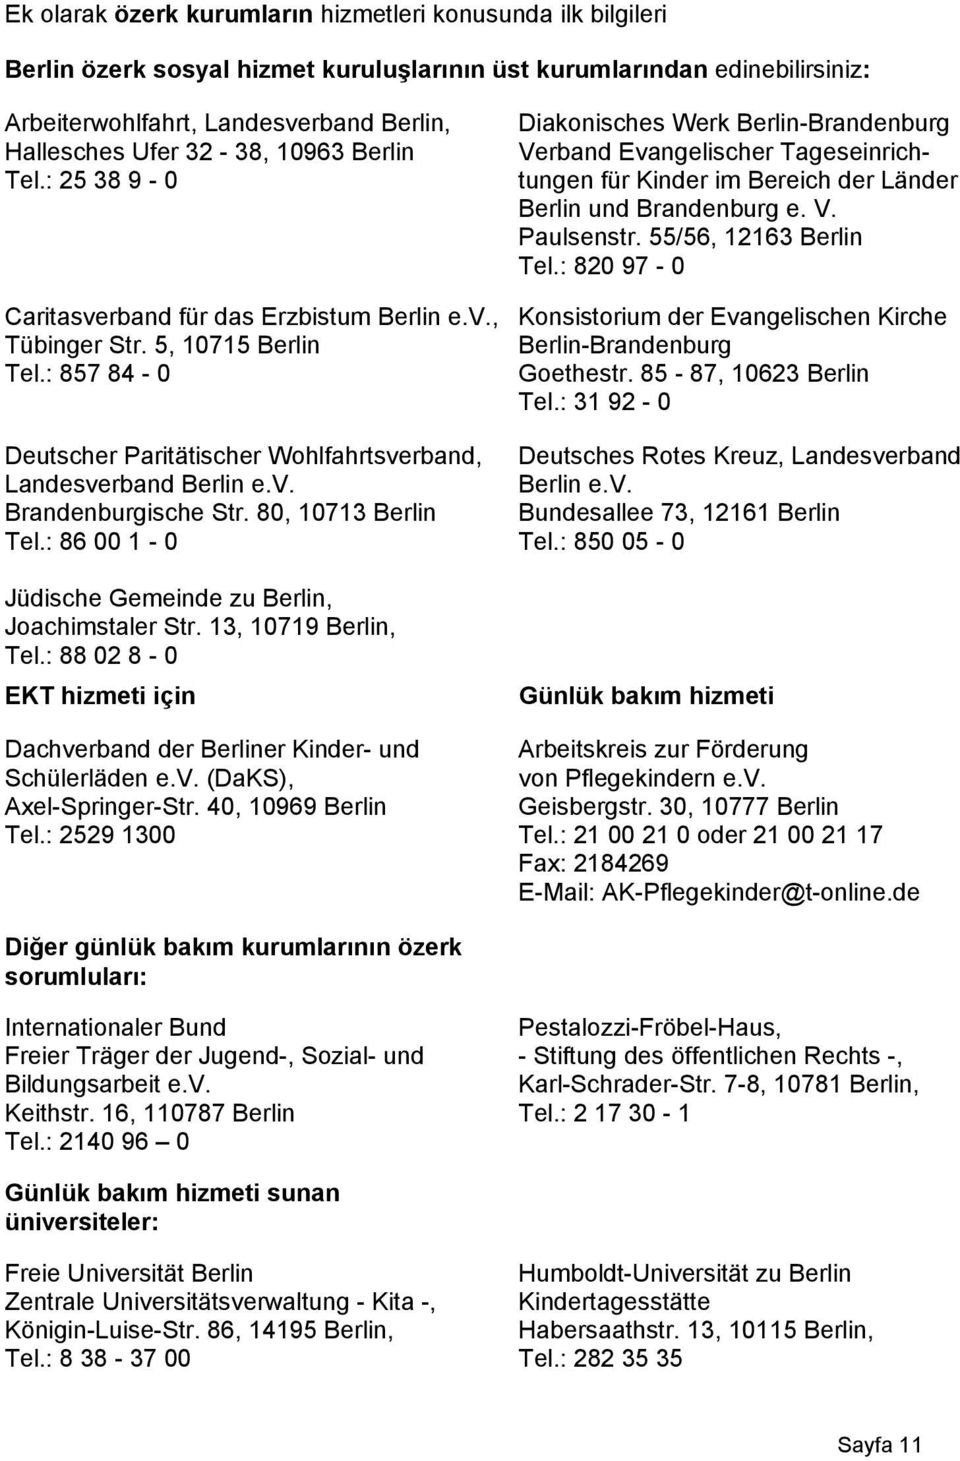 80, 10713 Berlin Tel.: 86 00 1-0 Jüdische Gemeinde zu Berlin, Joachimstaler Str. 13, 10719 Berlin, Tel.: 88 02 8-0 EKT hizmeti için Dachverband der Berliner Kinder- und Schülerläden e.v. (DaKS), Axel-Springer-Str.